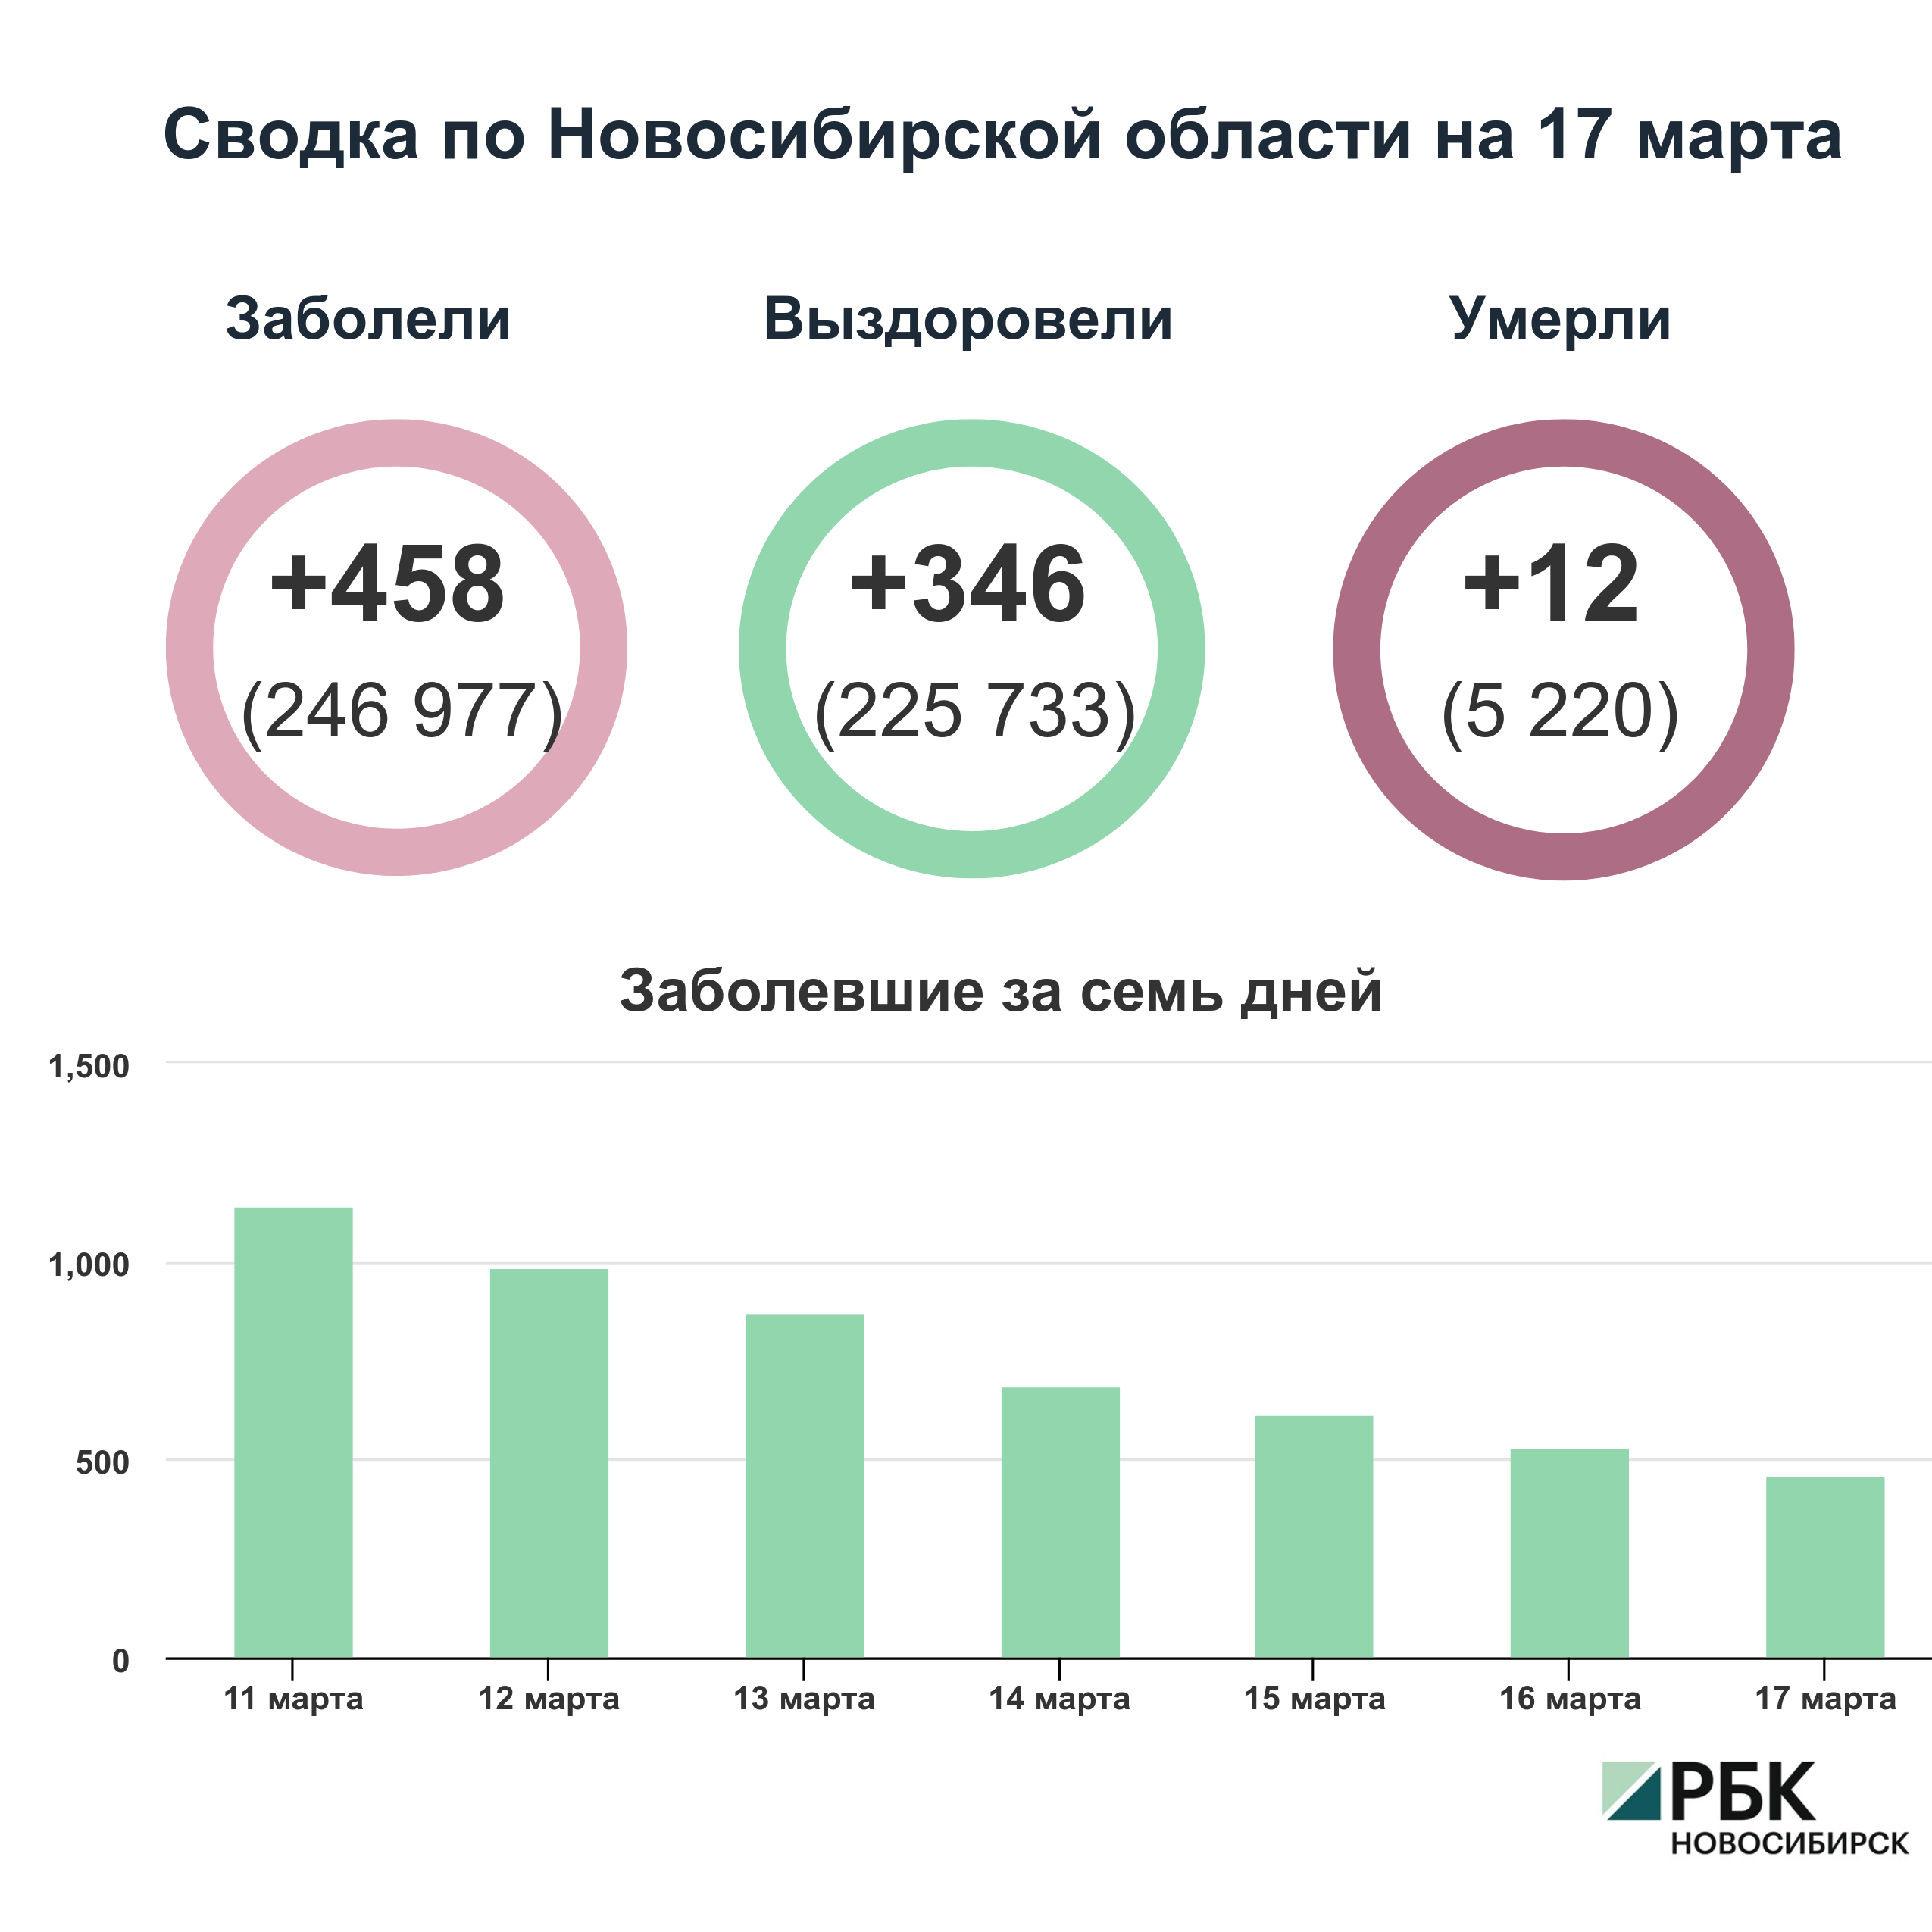 Коронавирус в Новосибирске: сводка на 17 марта